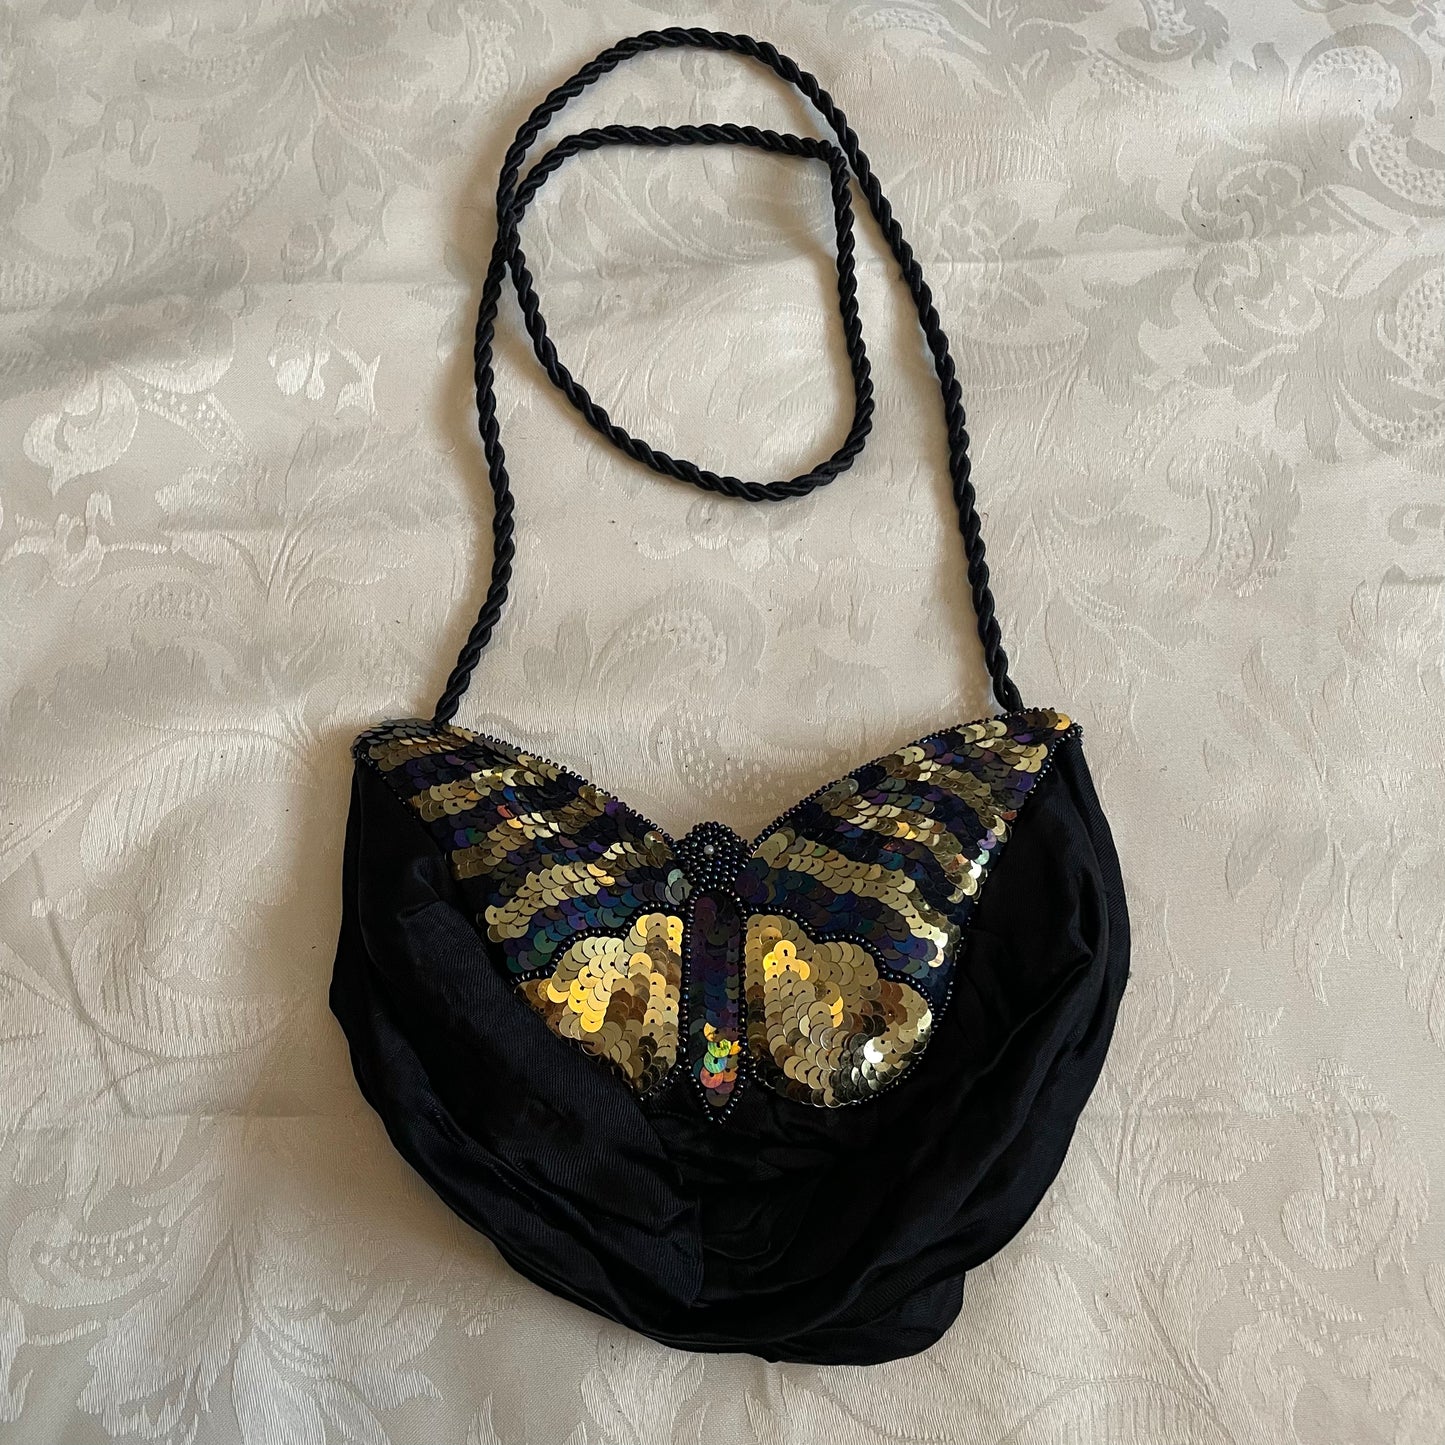 Butterfly sequin evening bag